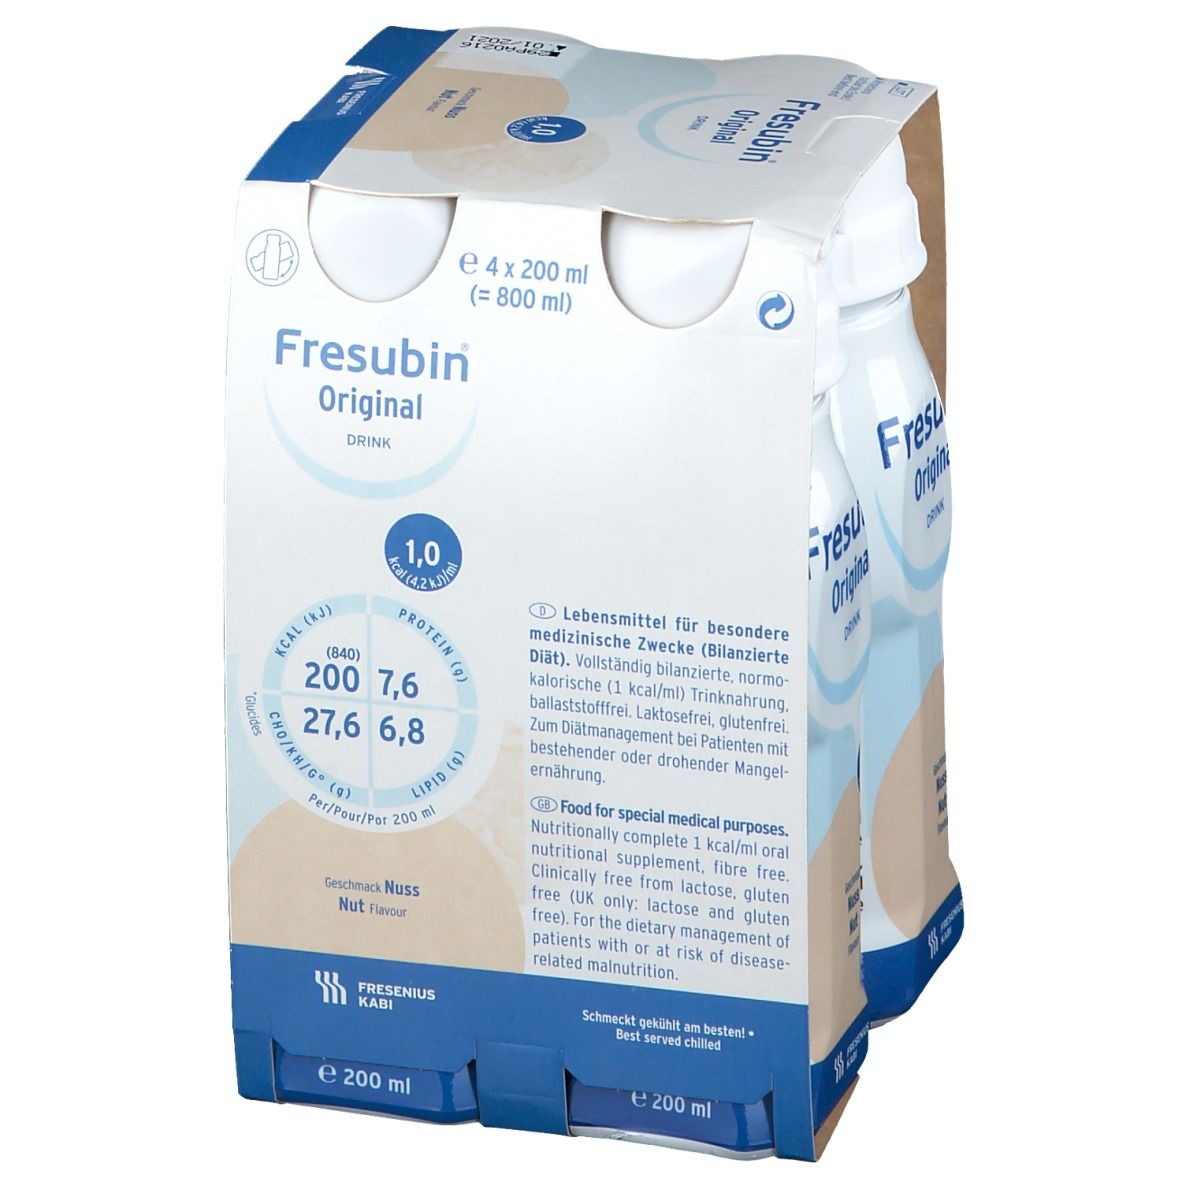 Fresubin® Original DRINK Nuss